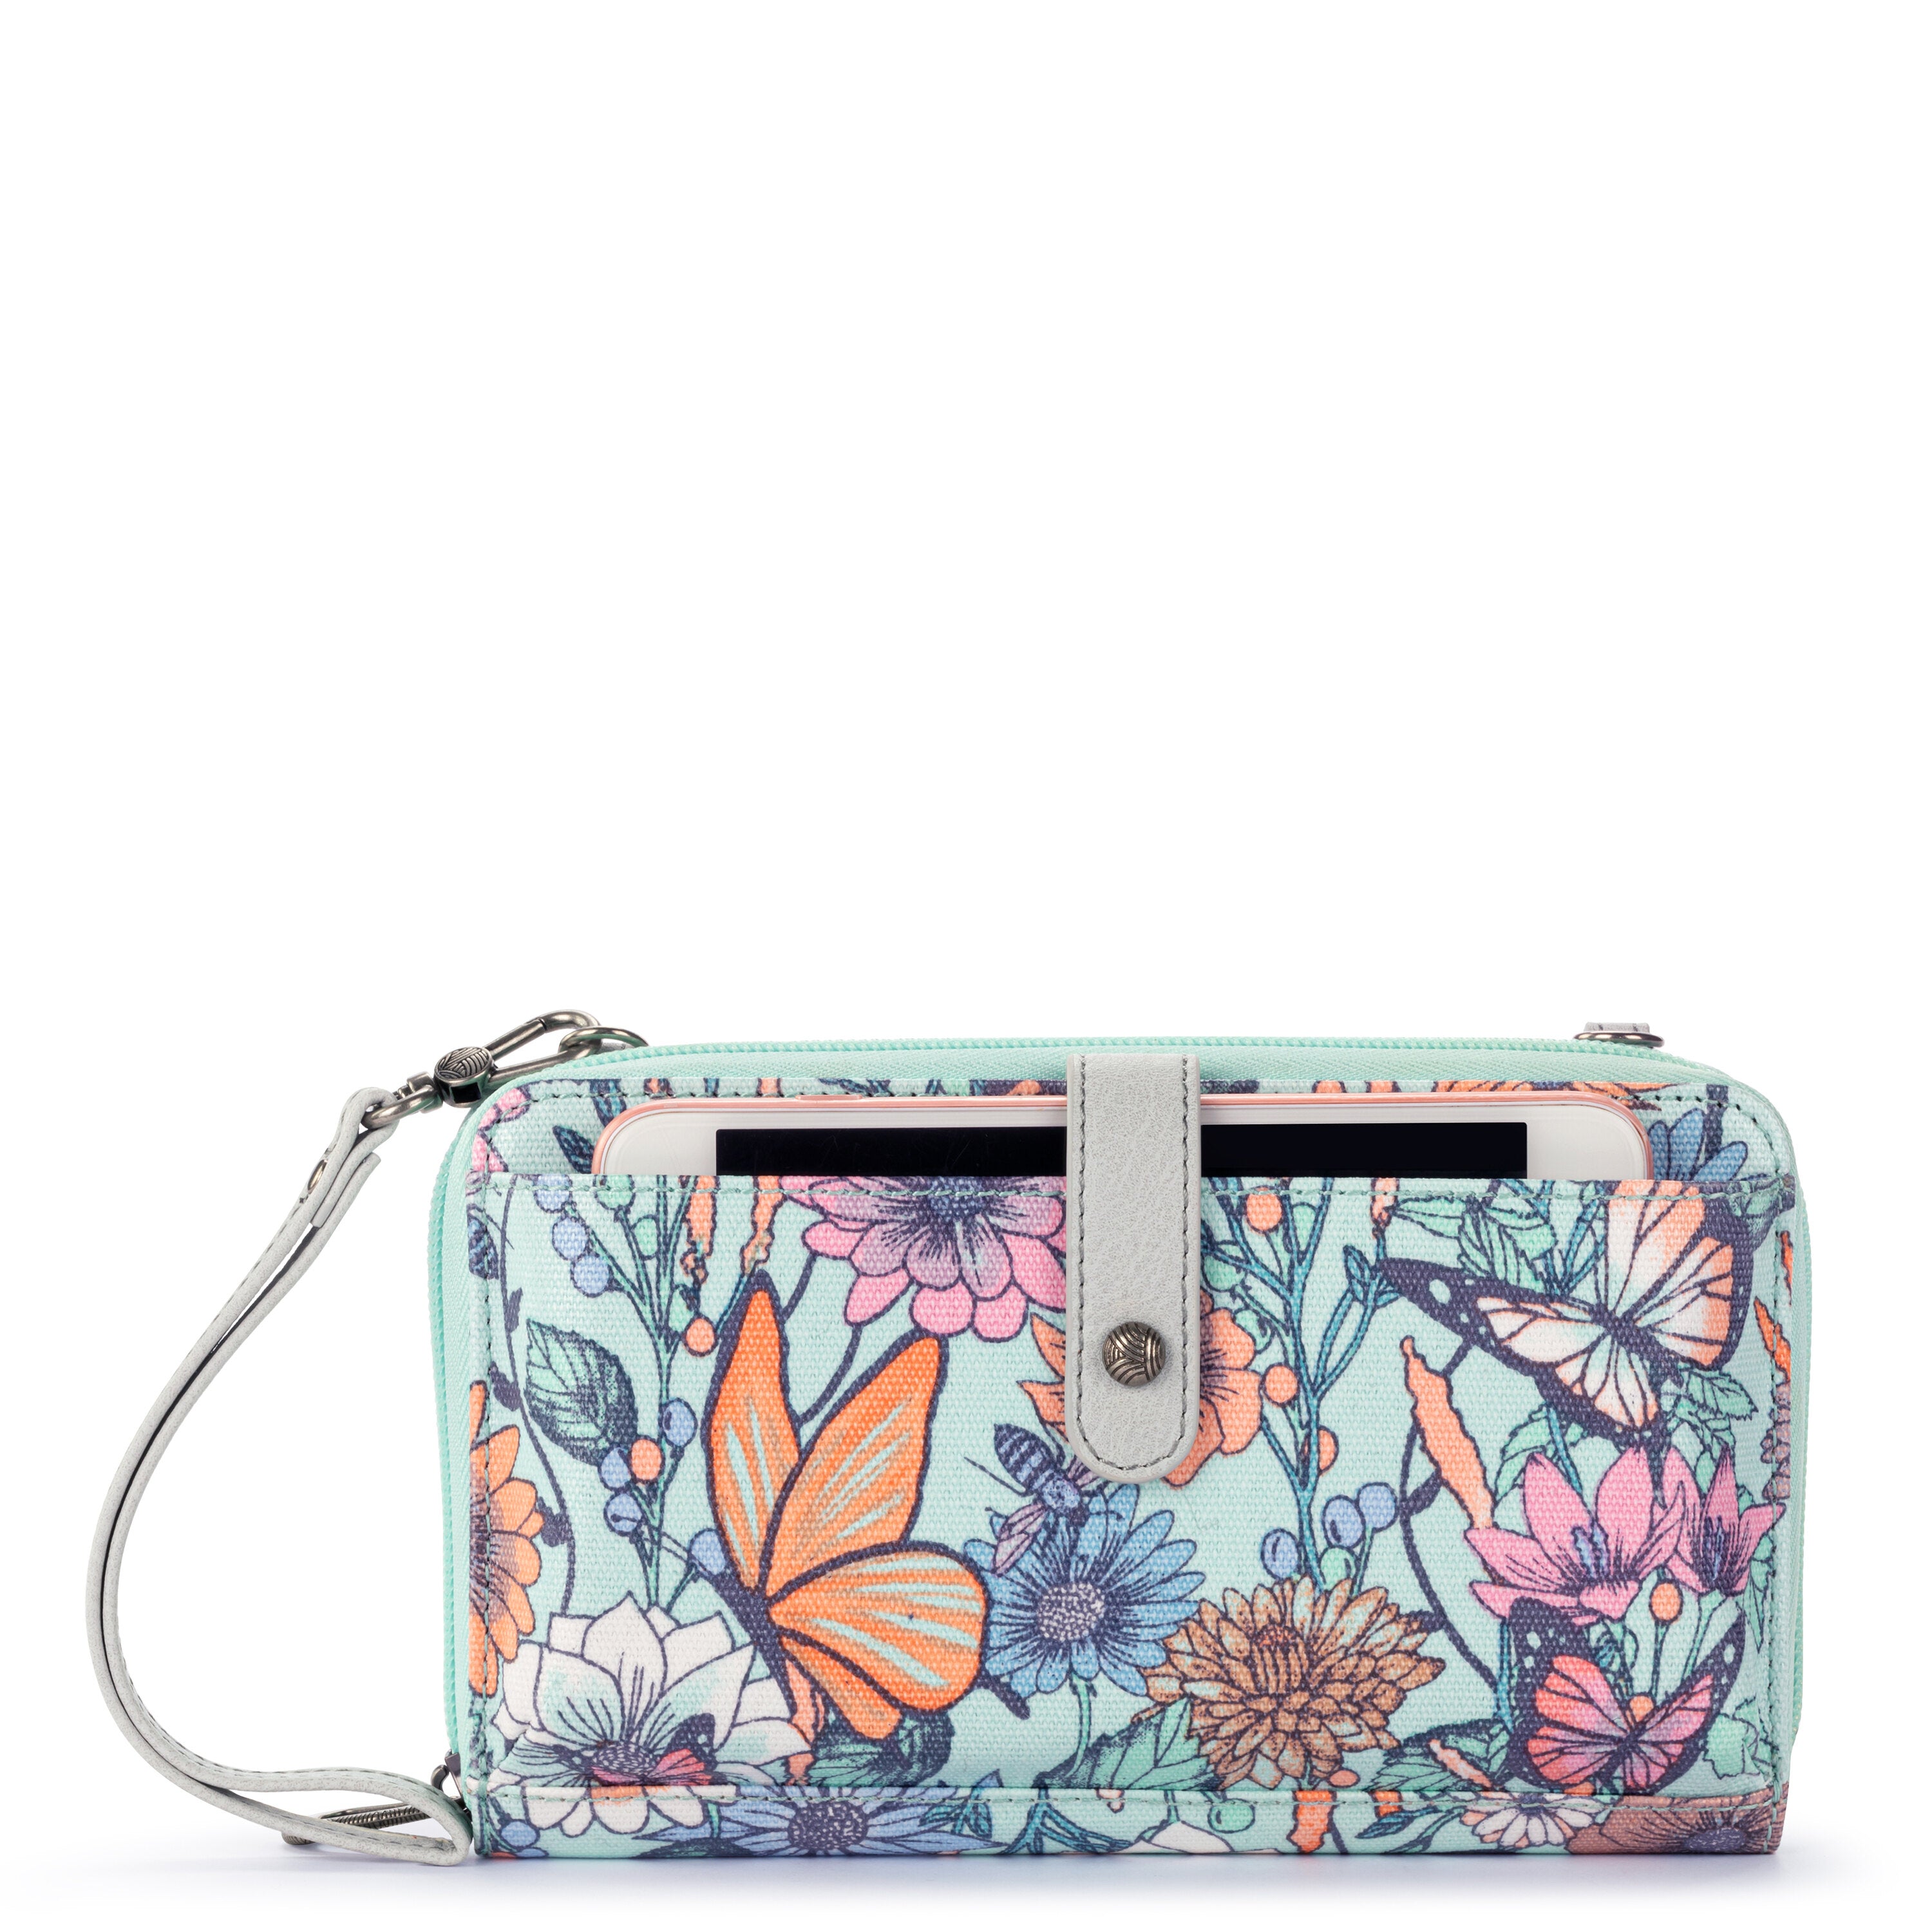 BREE purse Lynn 161 Long Purse Olive | Buy bags, purses & accessories online  | modeherz